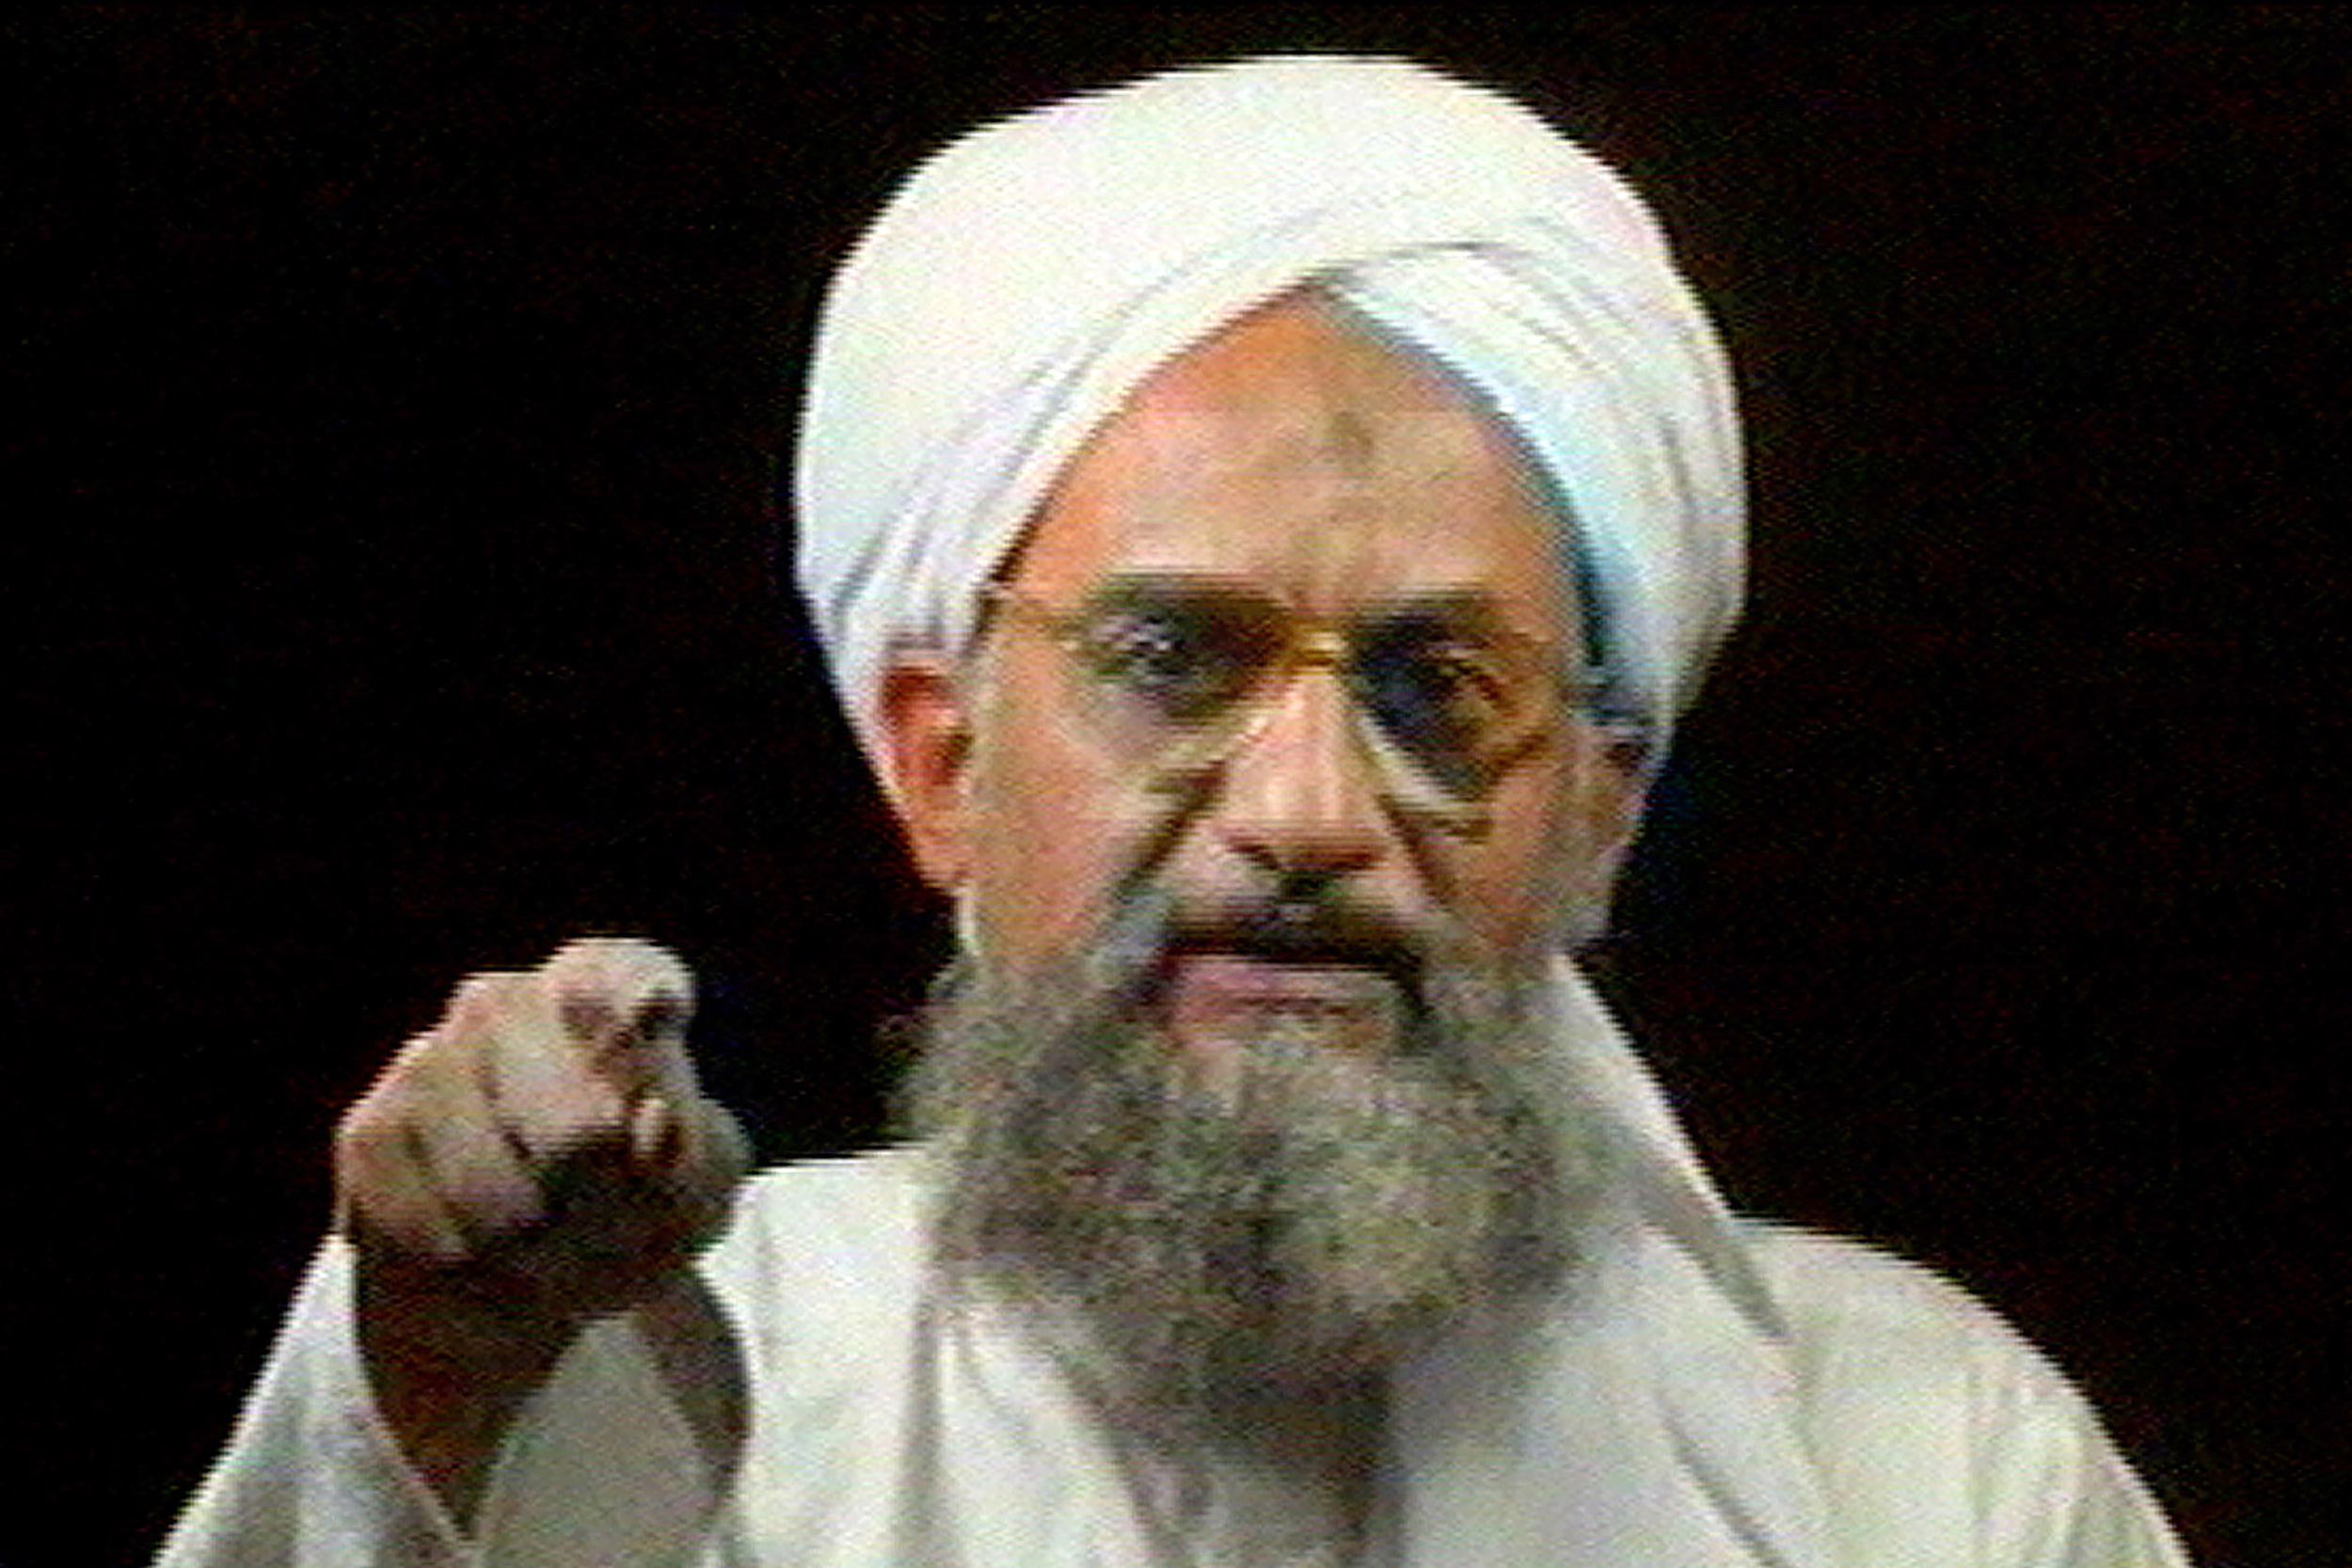 US kills al Qaeda leader Ayman al-Zawahiri in drone strike in Afghanistan